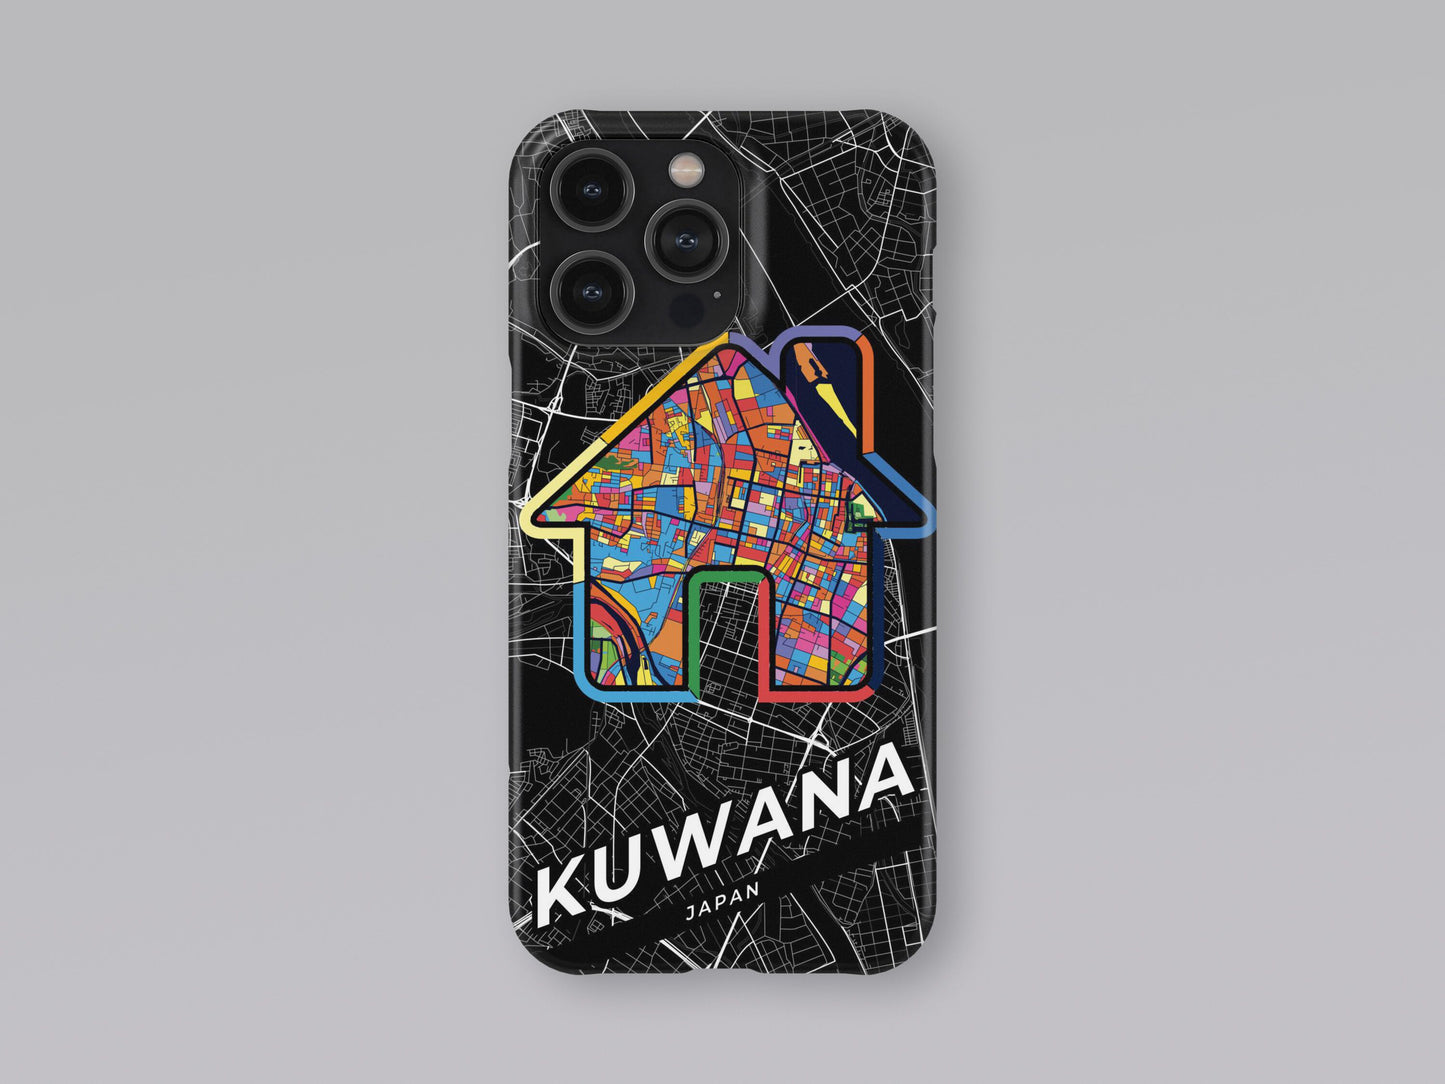 Kuwana Japan slim phone case with colorful icon. Birthday, wedding or housewarming gift. Couple match cases. 3